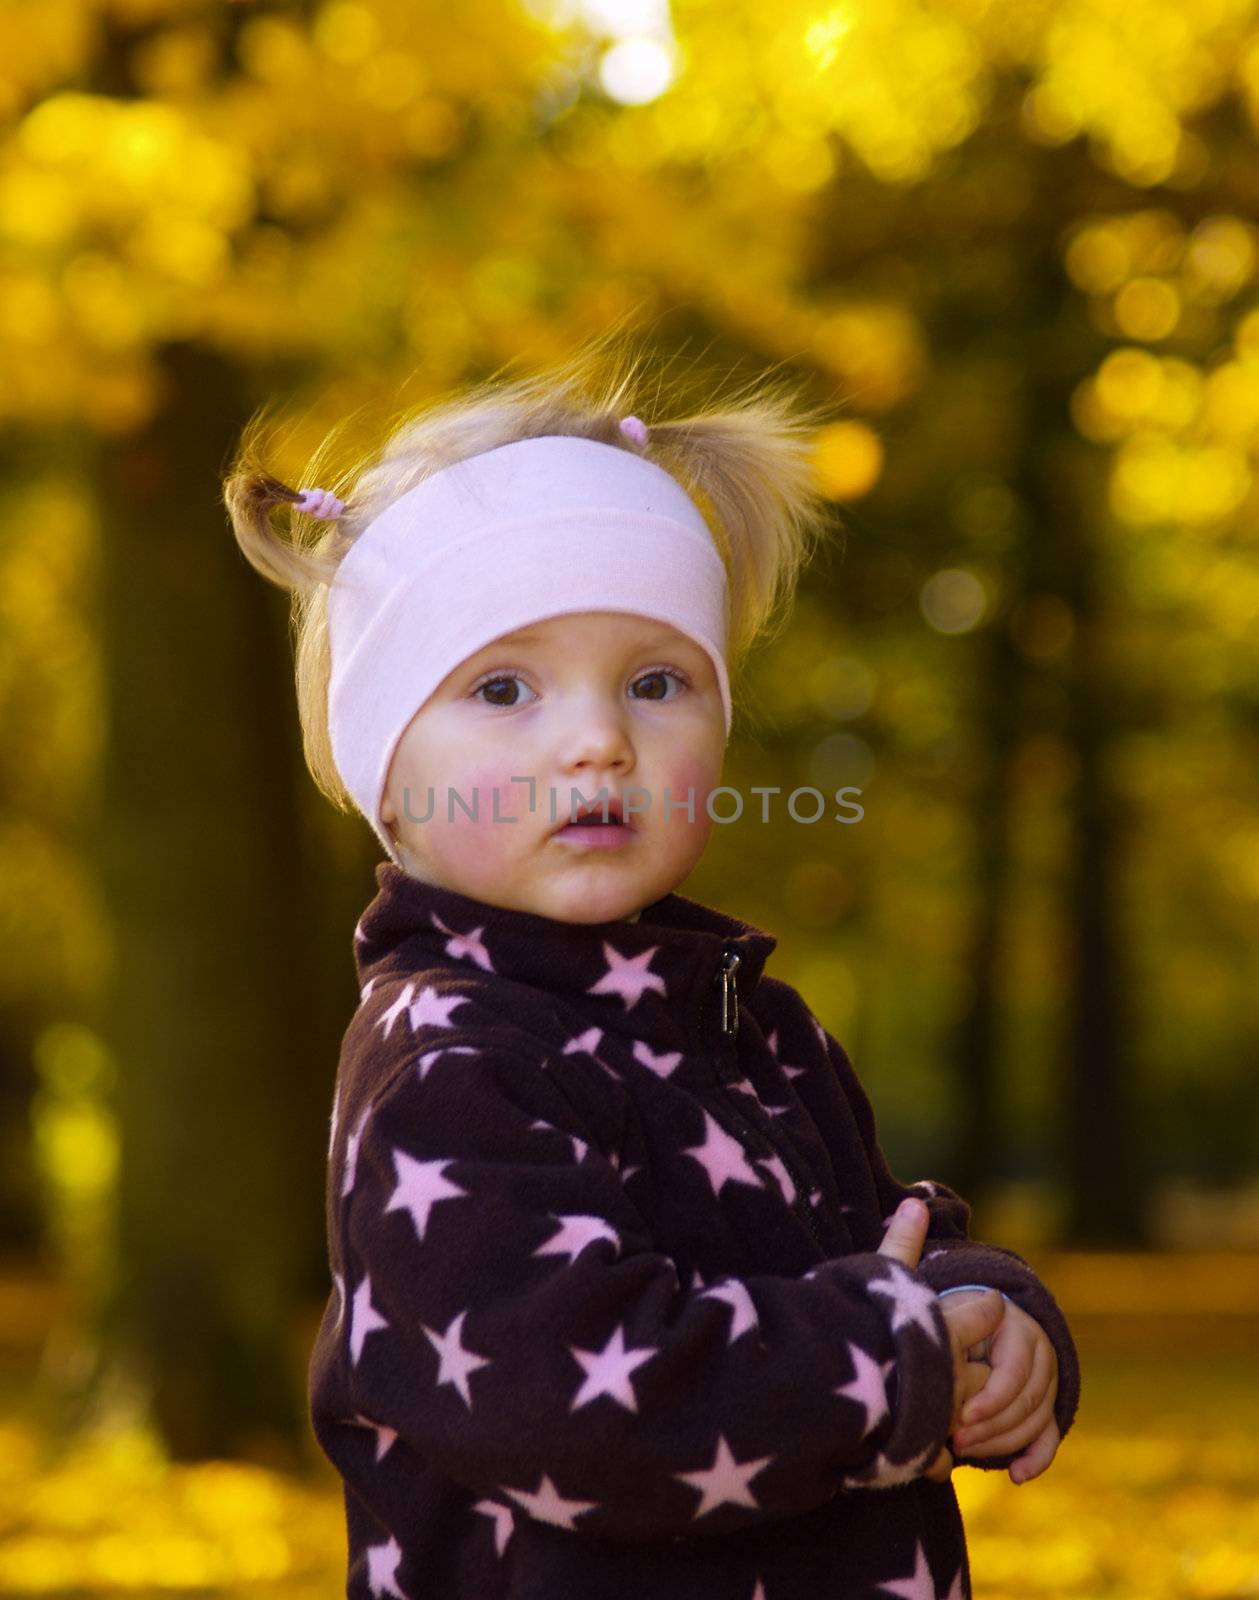 adoreable little girls portrait in autumn